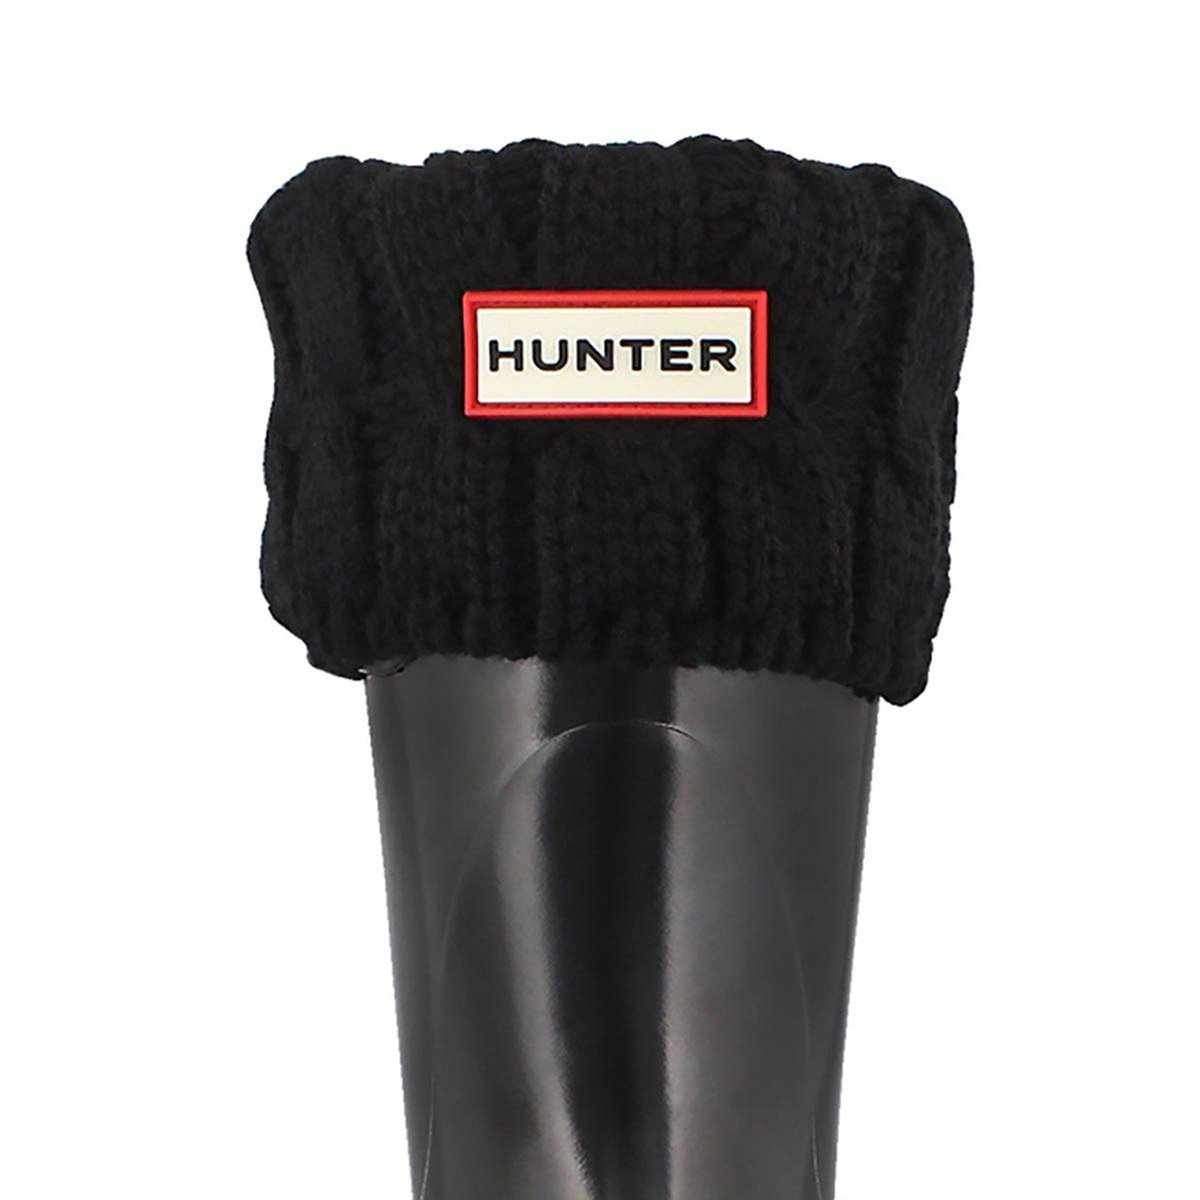 Hunter Kids Boot Sock - Black